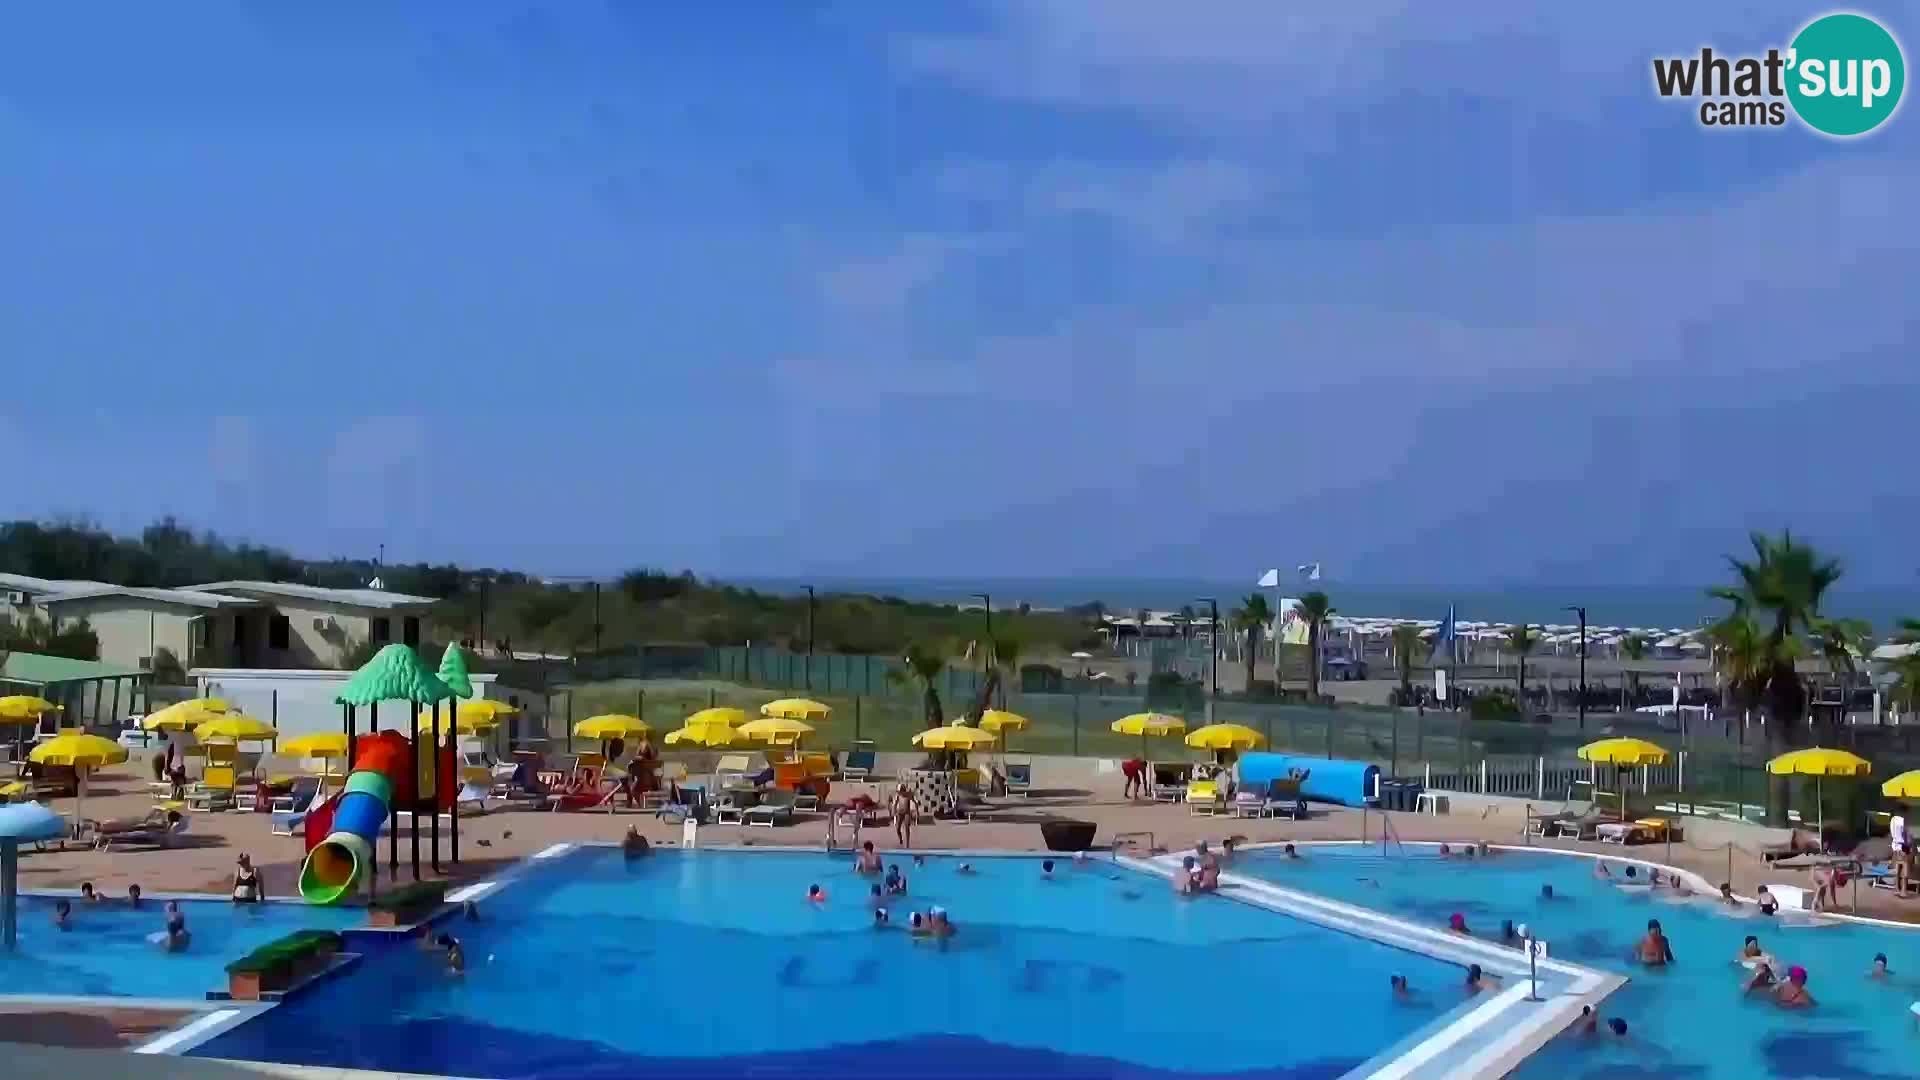 Resort Rosapineta Sud – camera